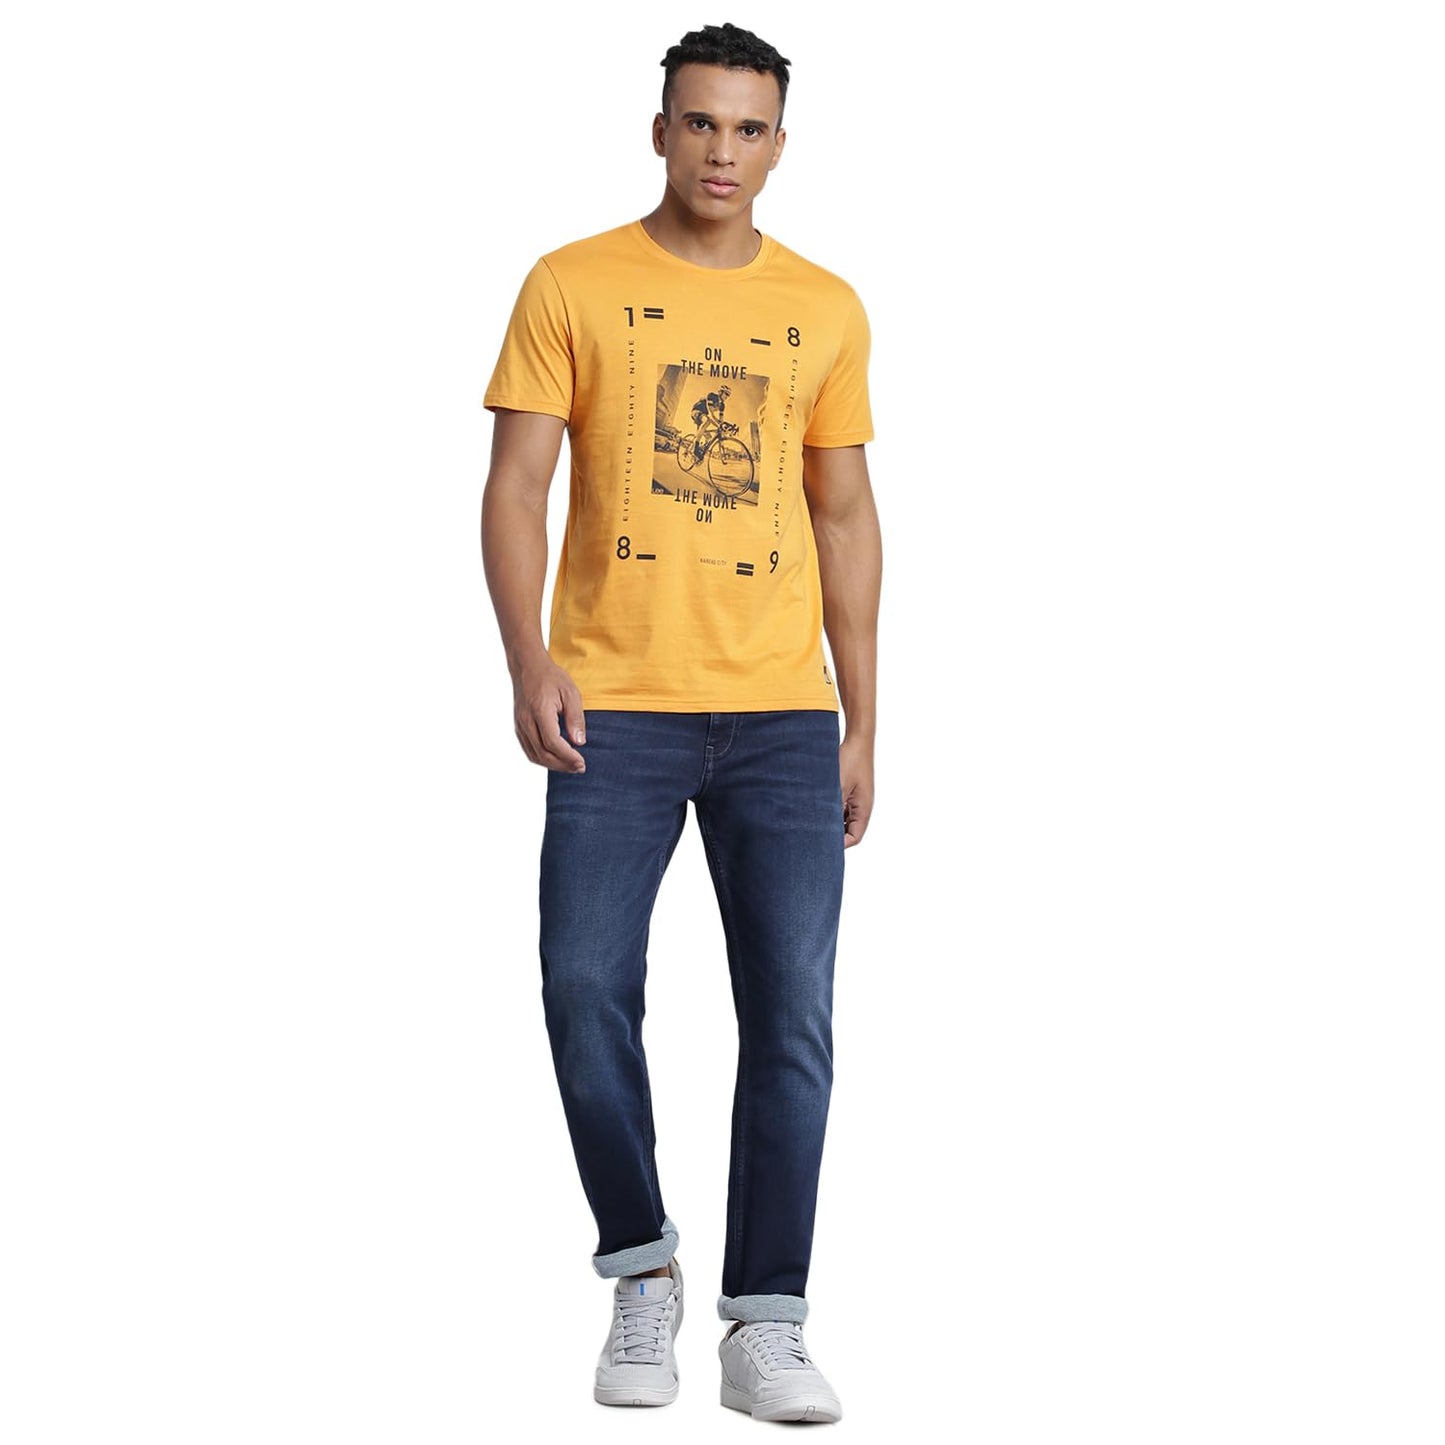 Lee Men's Slim Fit Shirt (LMTS004889_Yellow